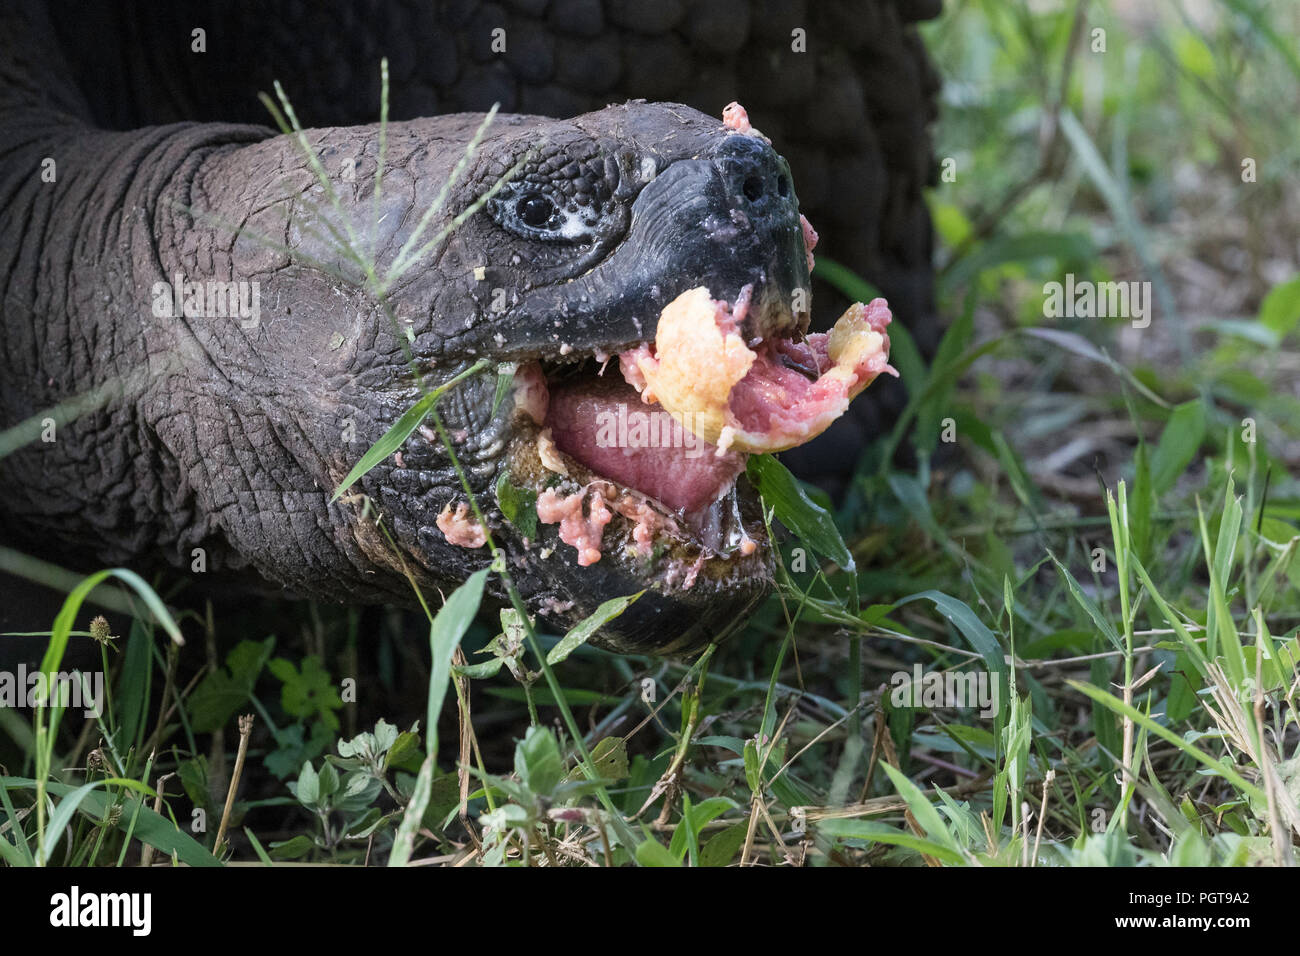 Wild Galápagos giant tortoise, Geochelone elephantopus, feeding on Santa Cruz Island, Galápagos. Stock Photo